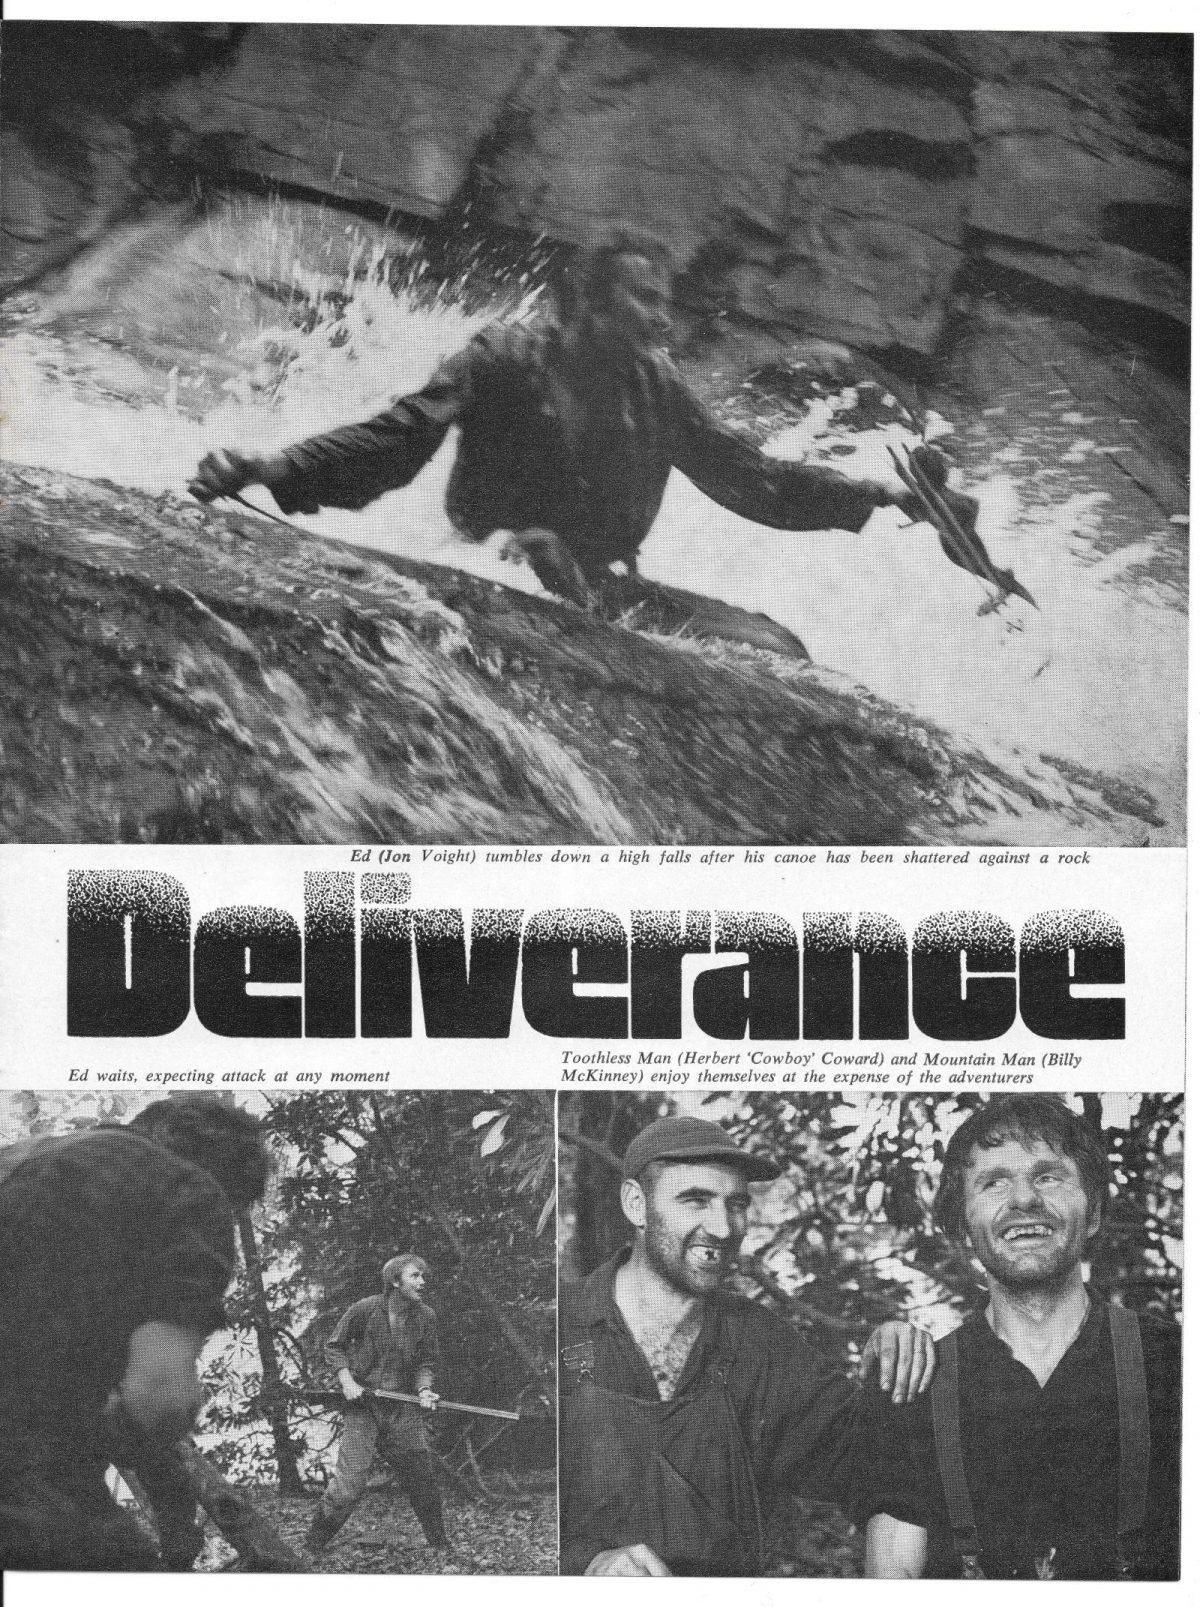 John Boorman, Deliverance, Films and Filming, movies, Jon Voight, Burt Reynolds